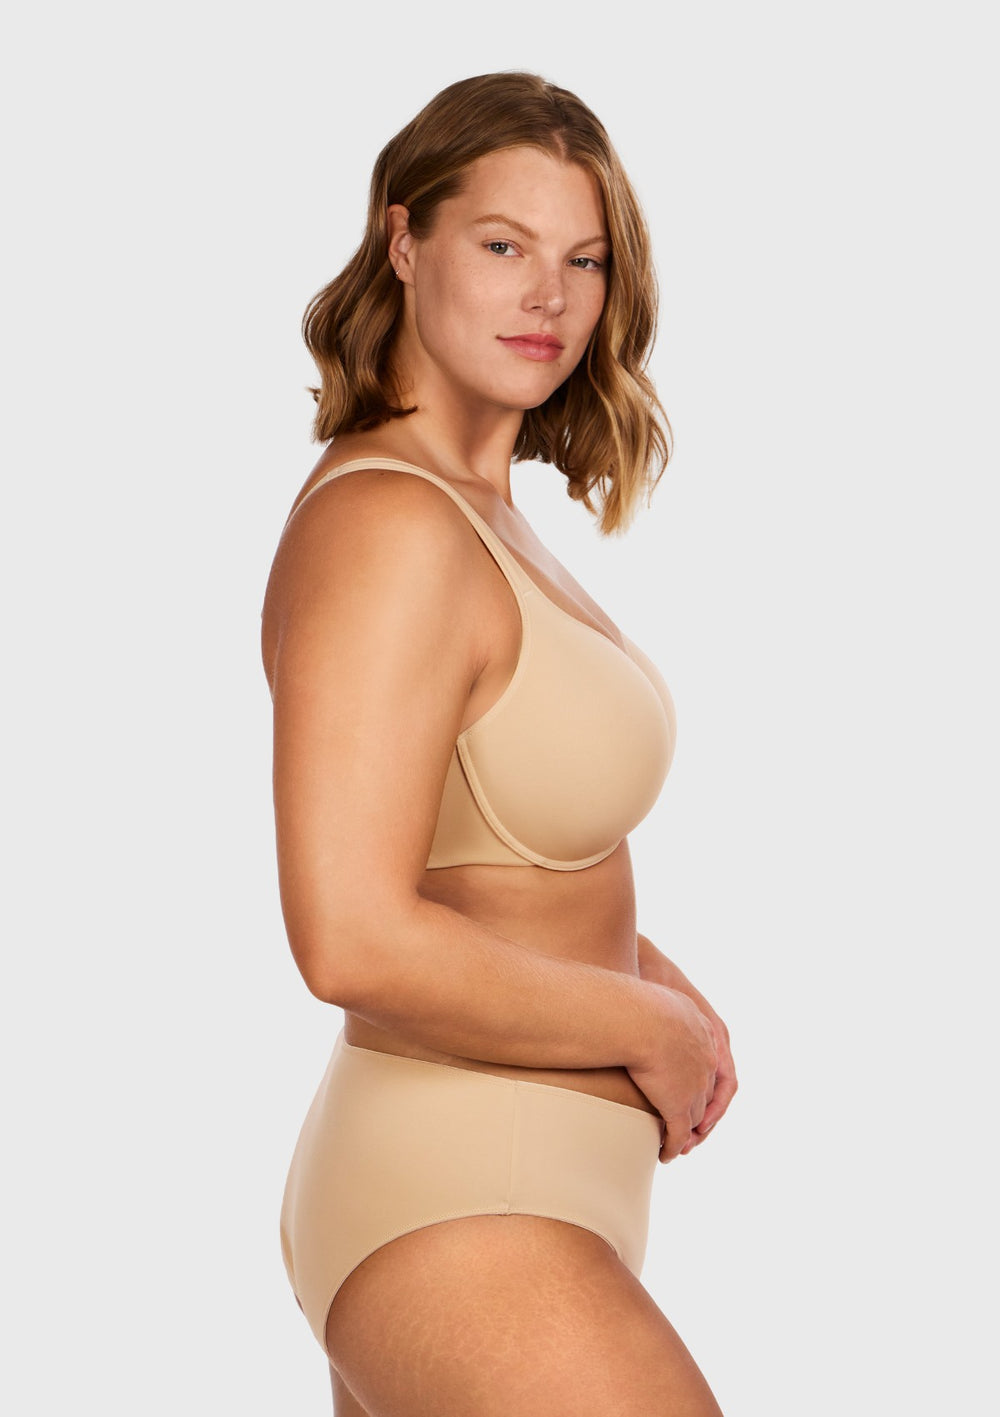 HSIA Patricia Seamless Nipple-Covered Minimizer Bra and Panty Set